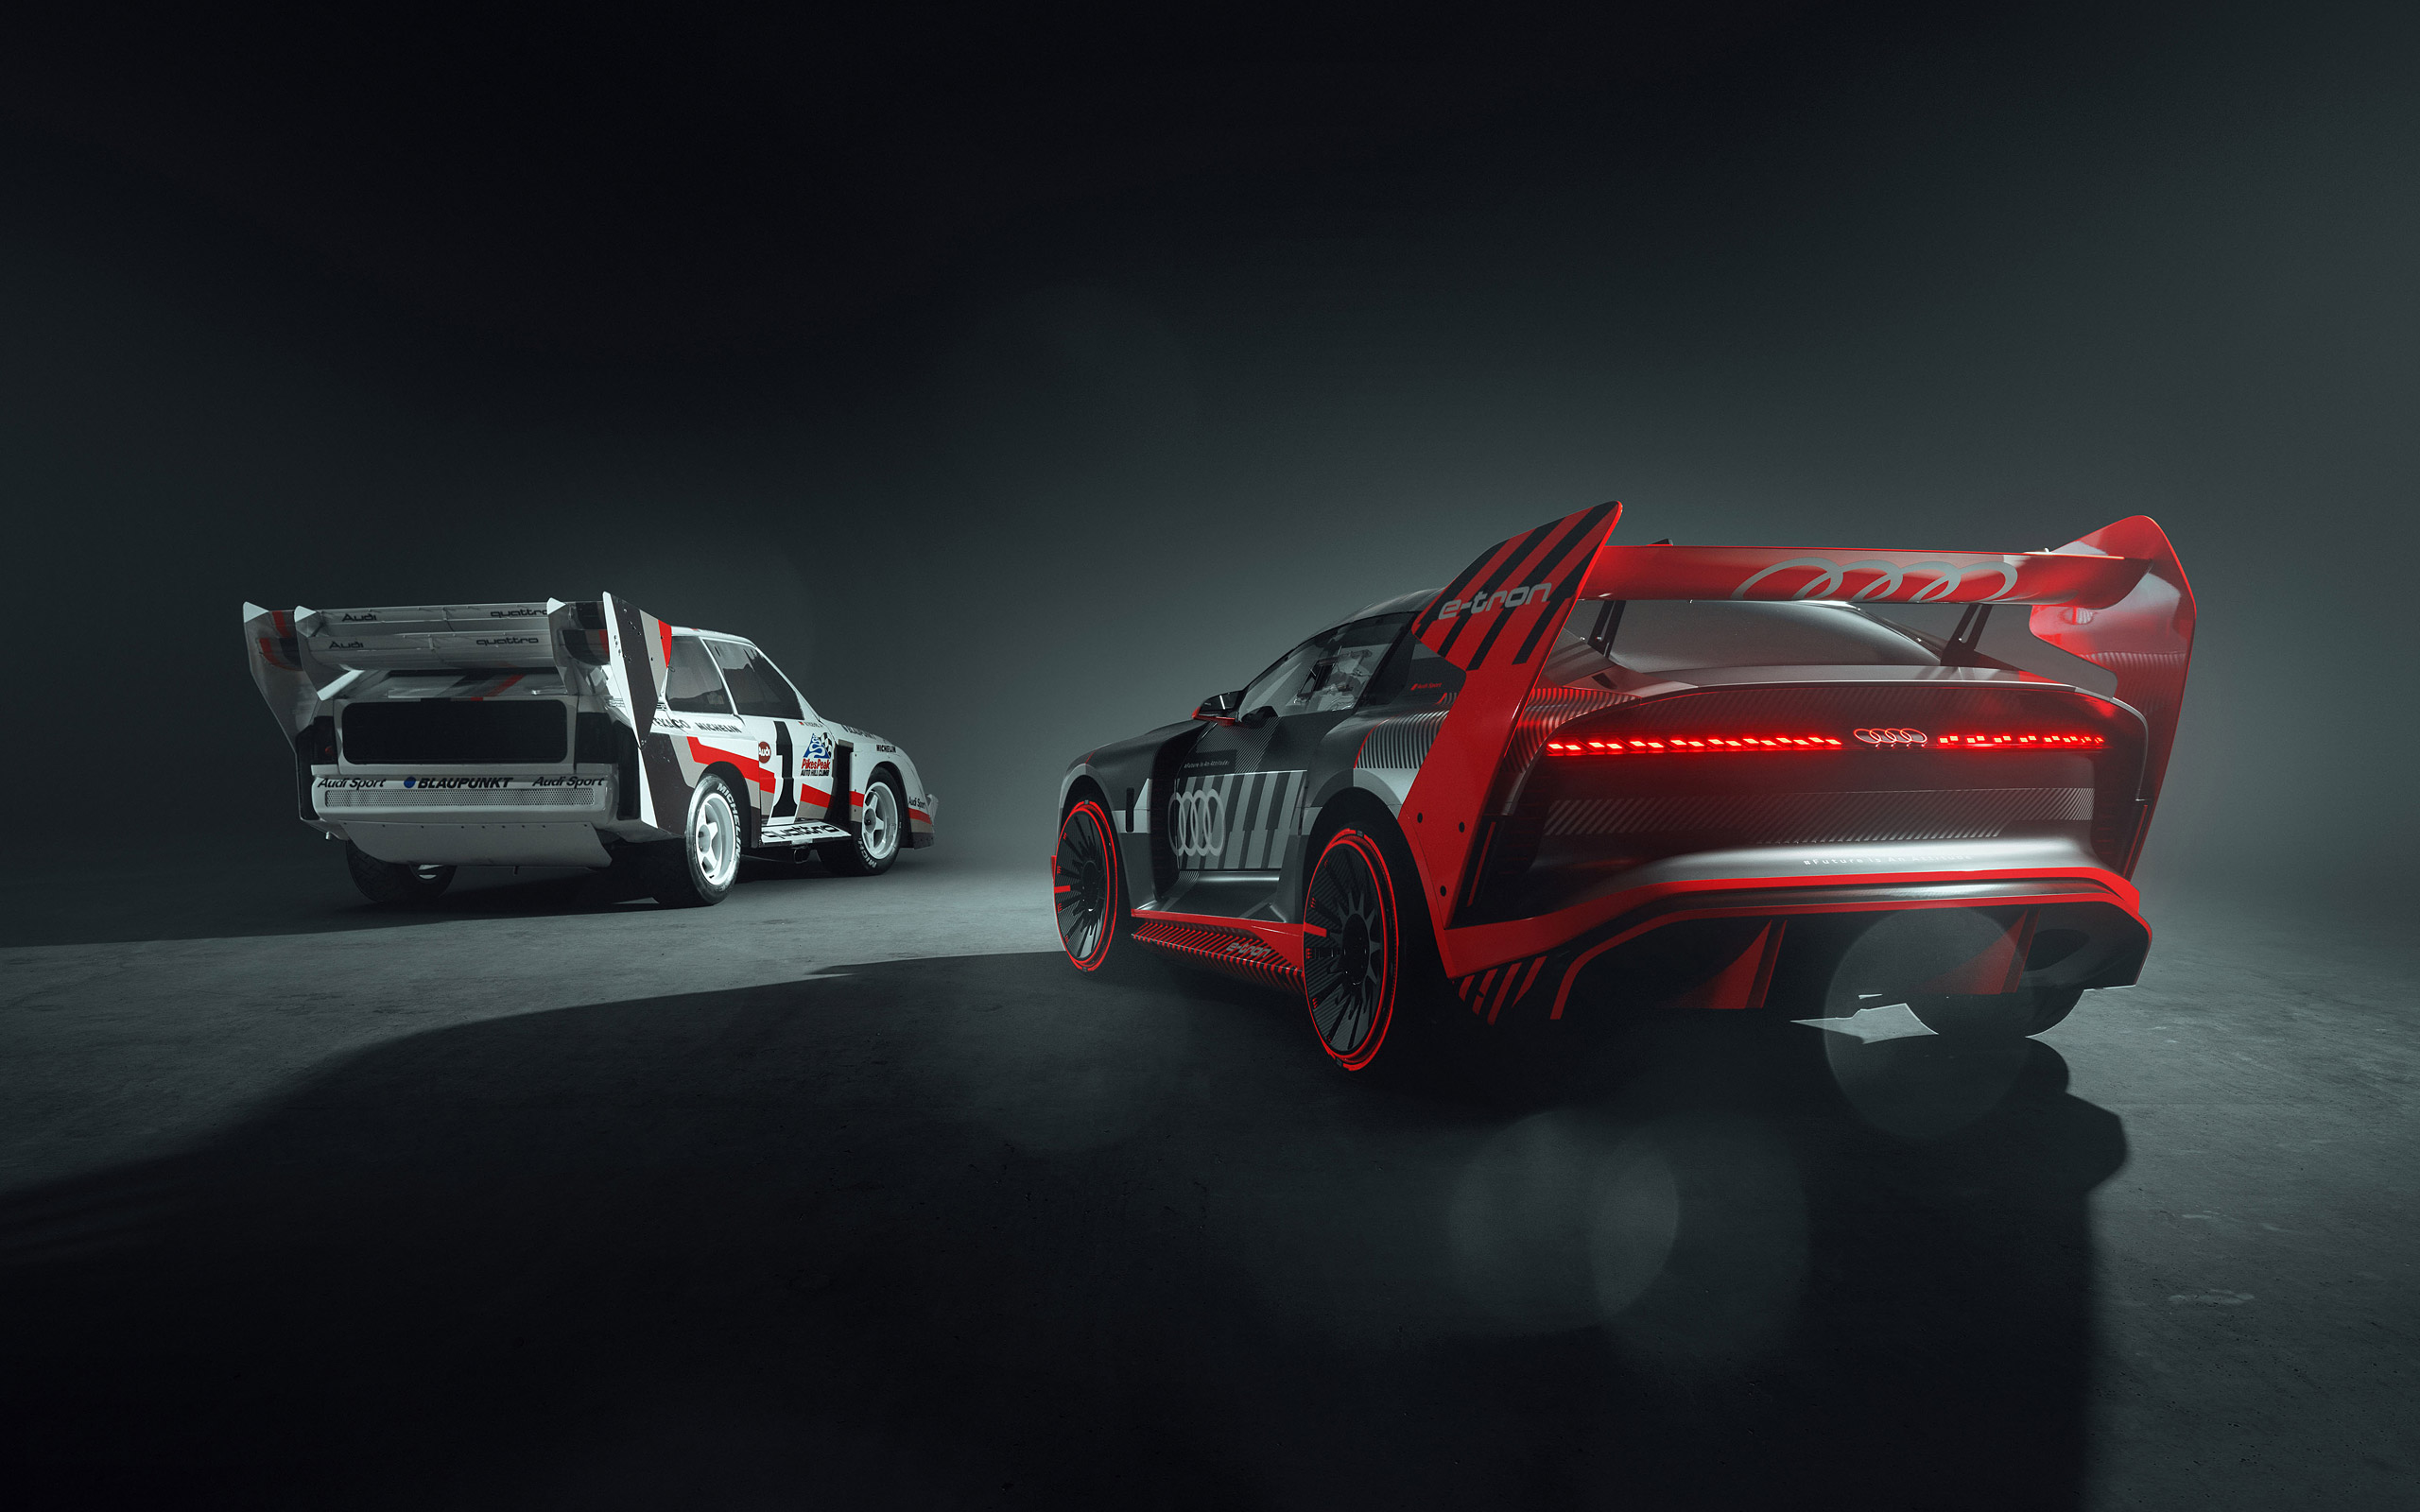  2021 Audi S1 Hoonitron Concept Wallpaper.